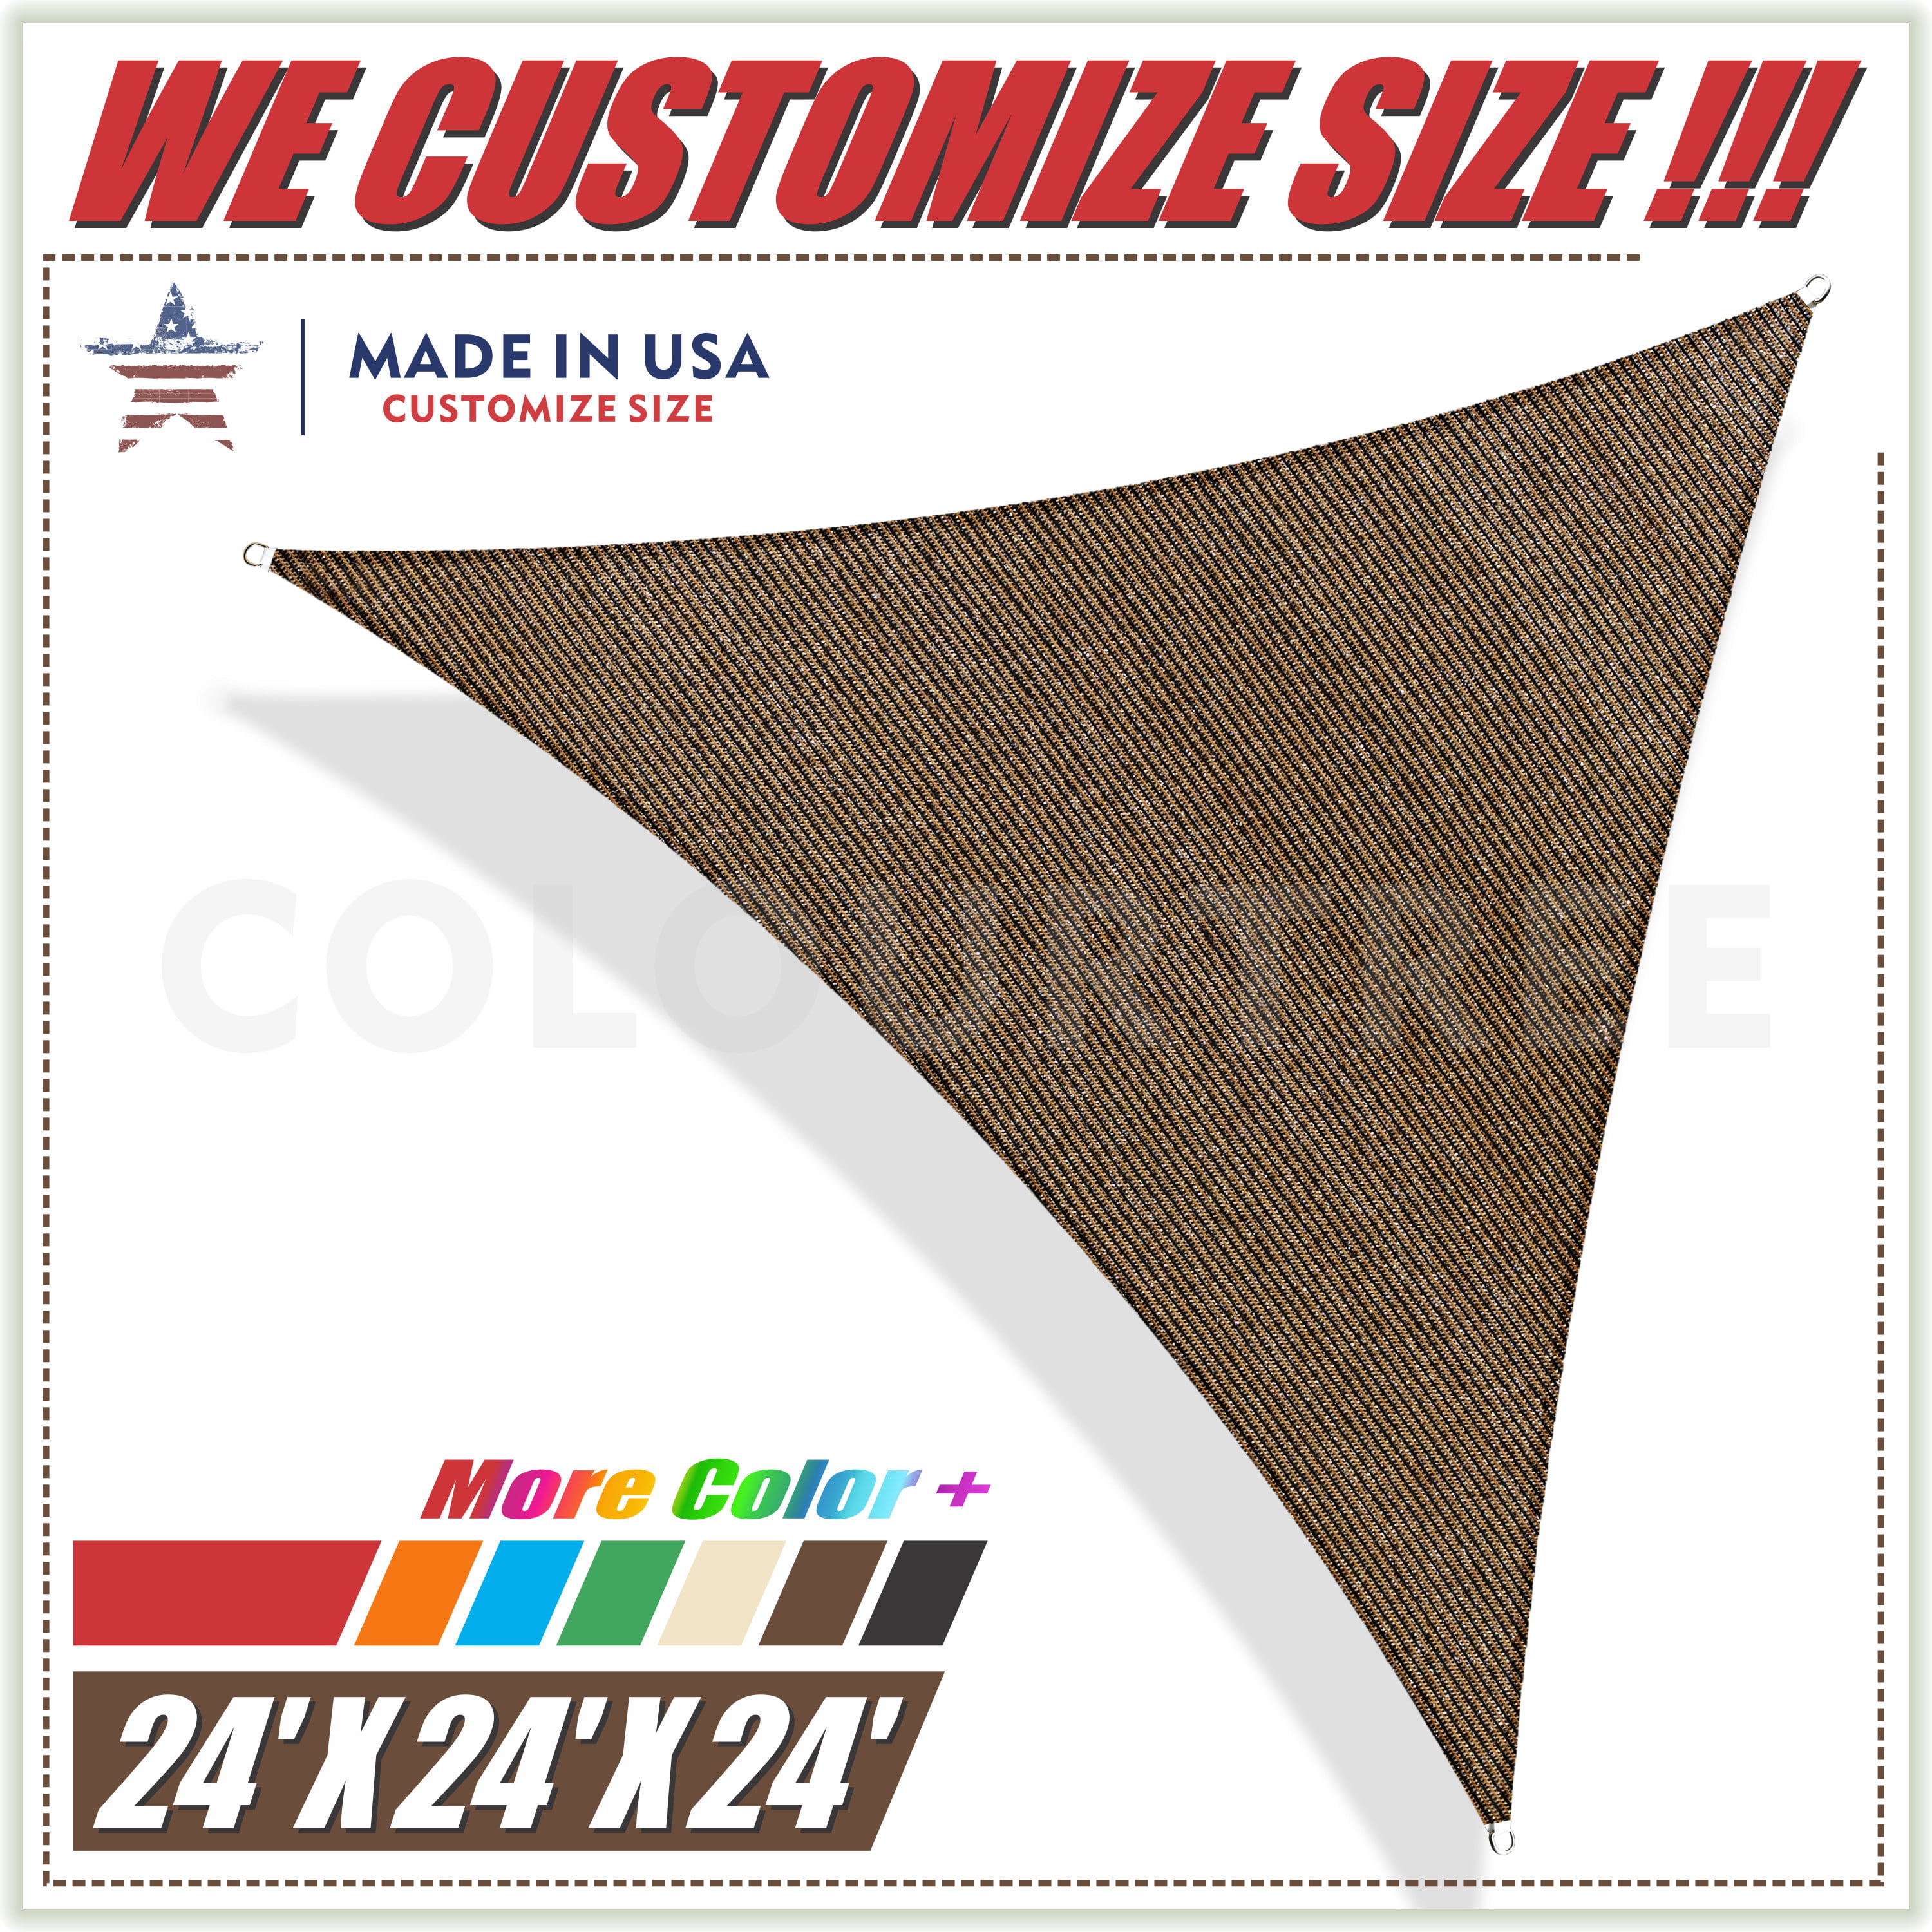 ColourTree 24' x 24' x 24' Sun Shade Sail Triangle Canopy Beige Brown CustomSize 